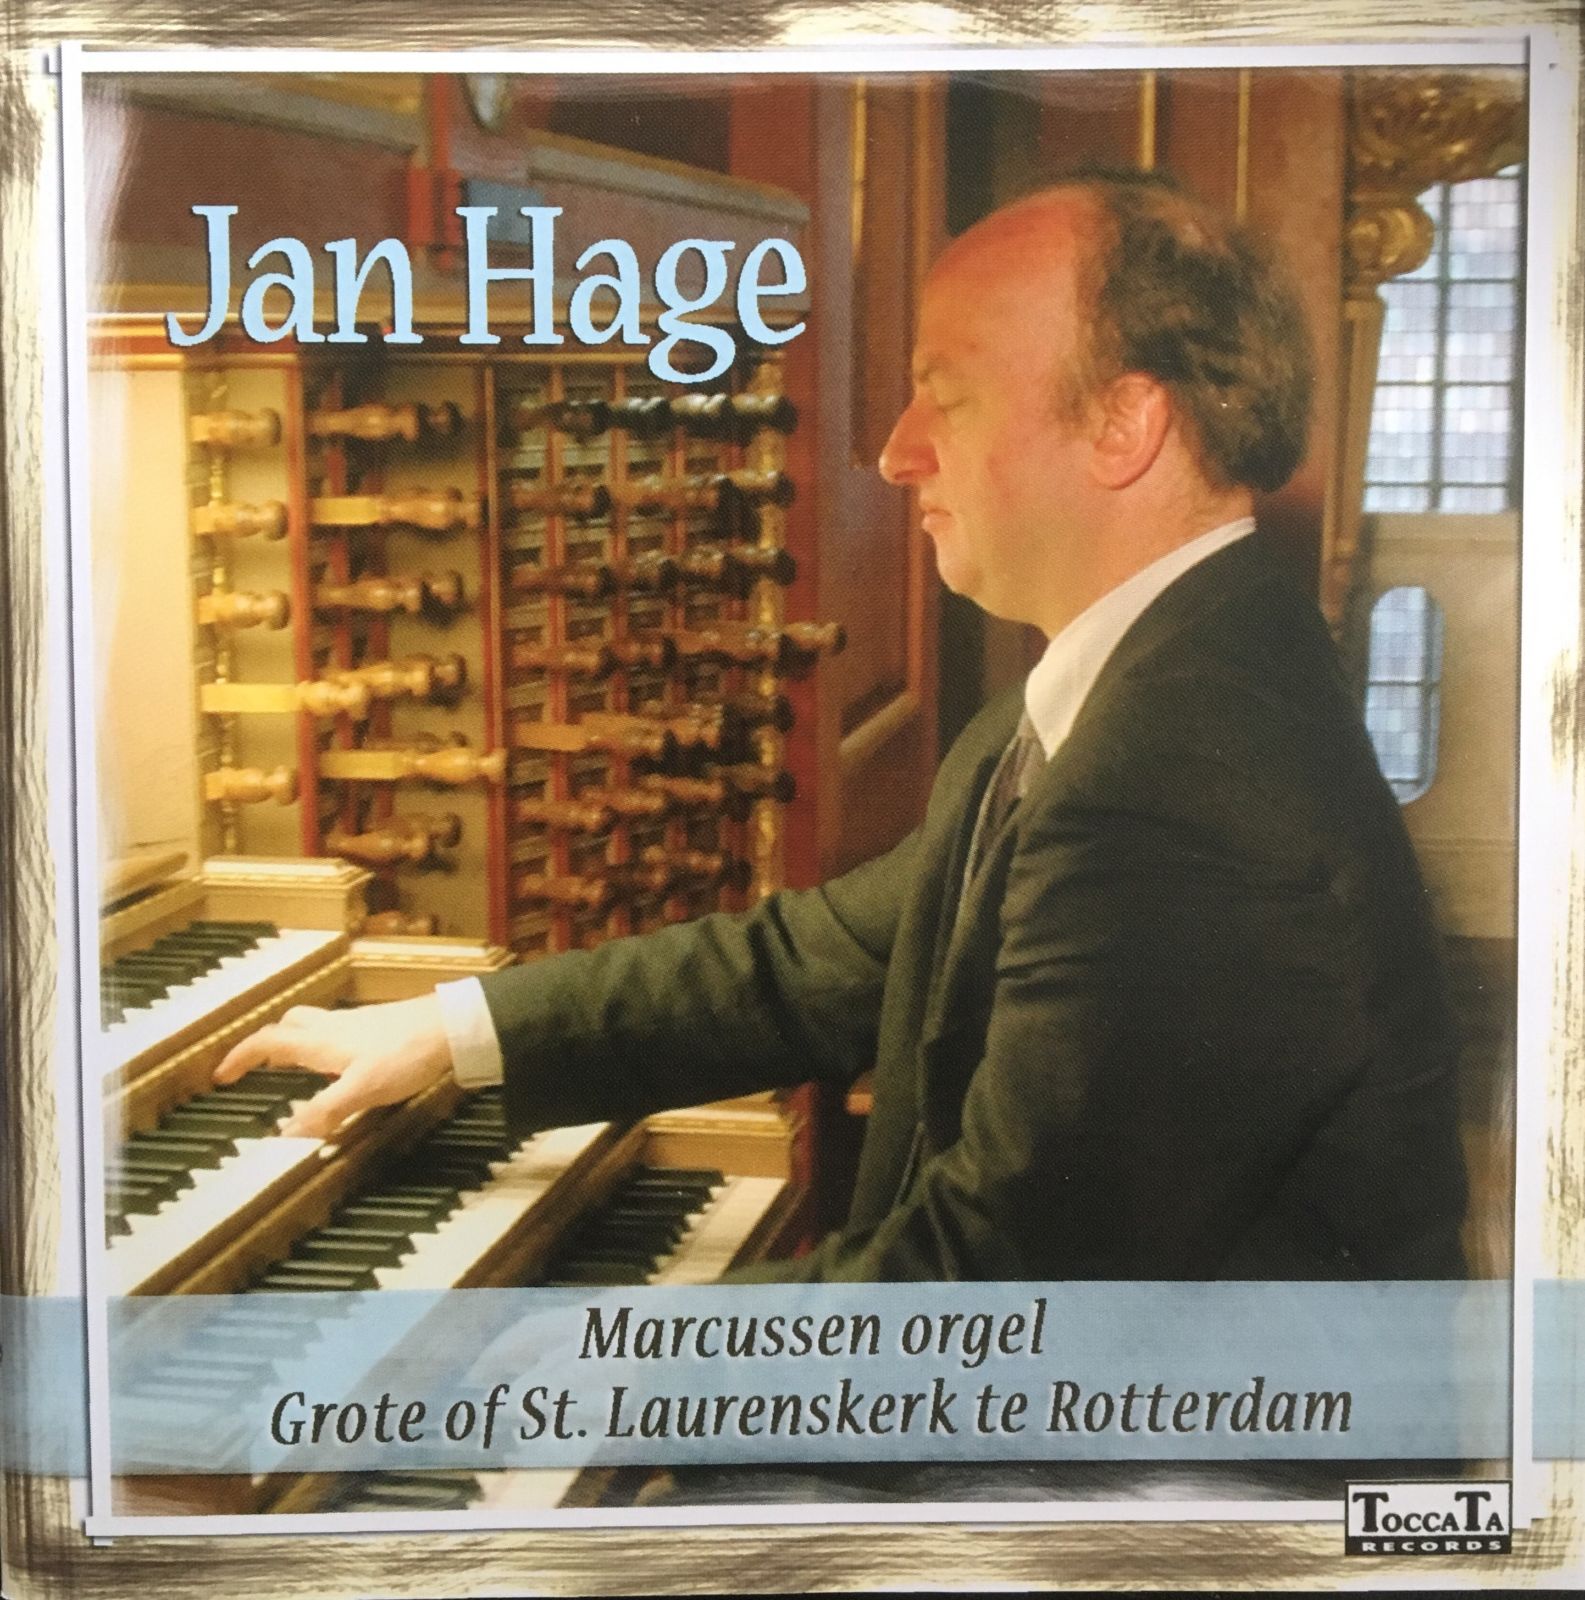 Jan Hage bespeelt het orgel van de Grote of St. Laurenskerk in Rotterdam